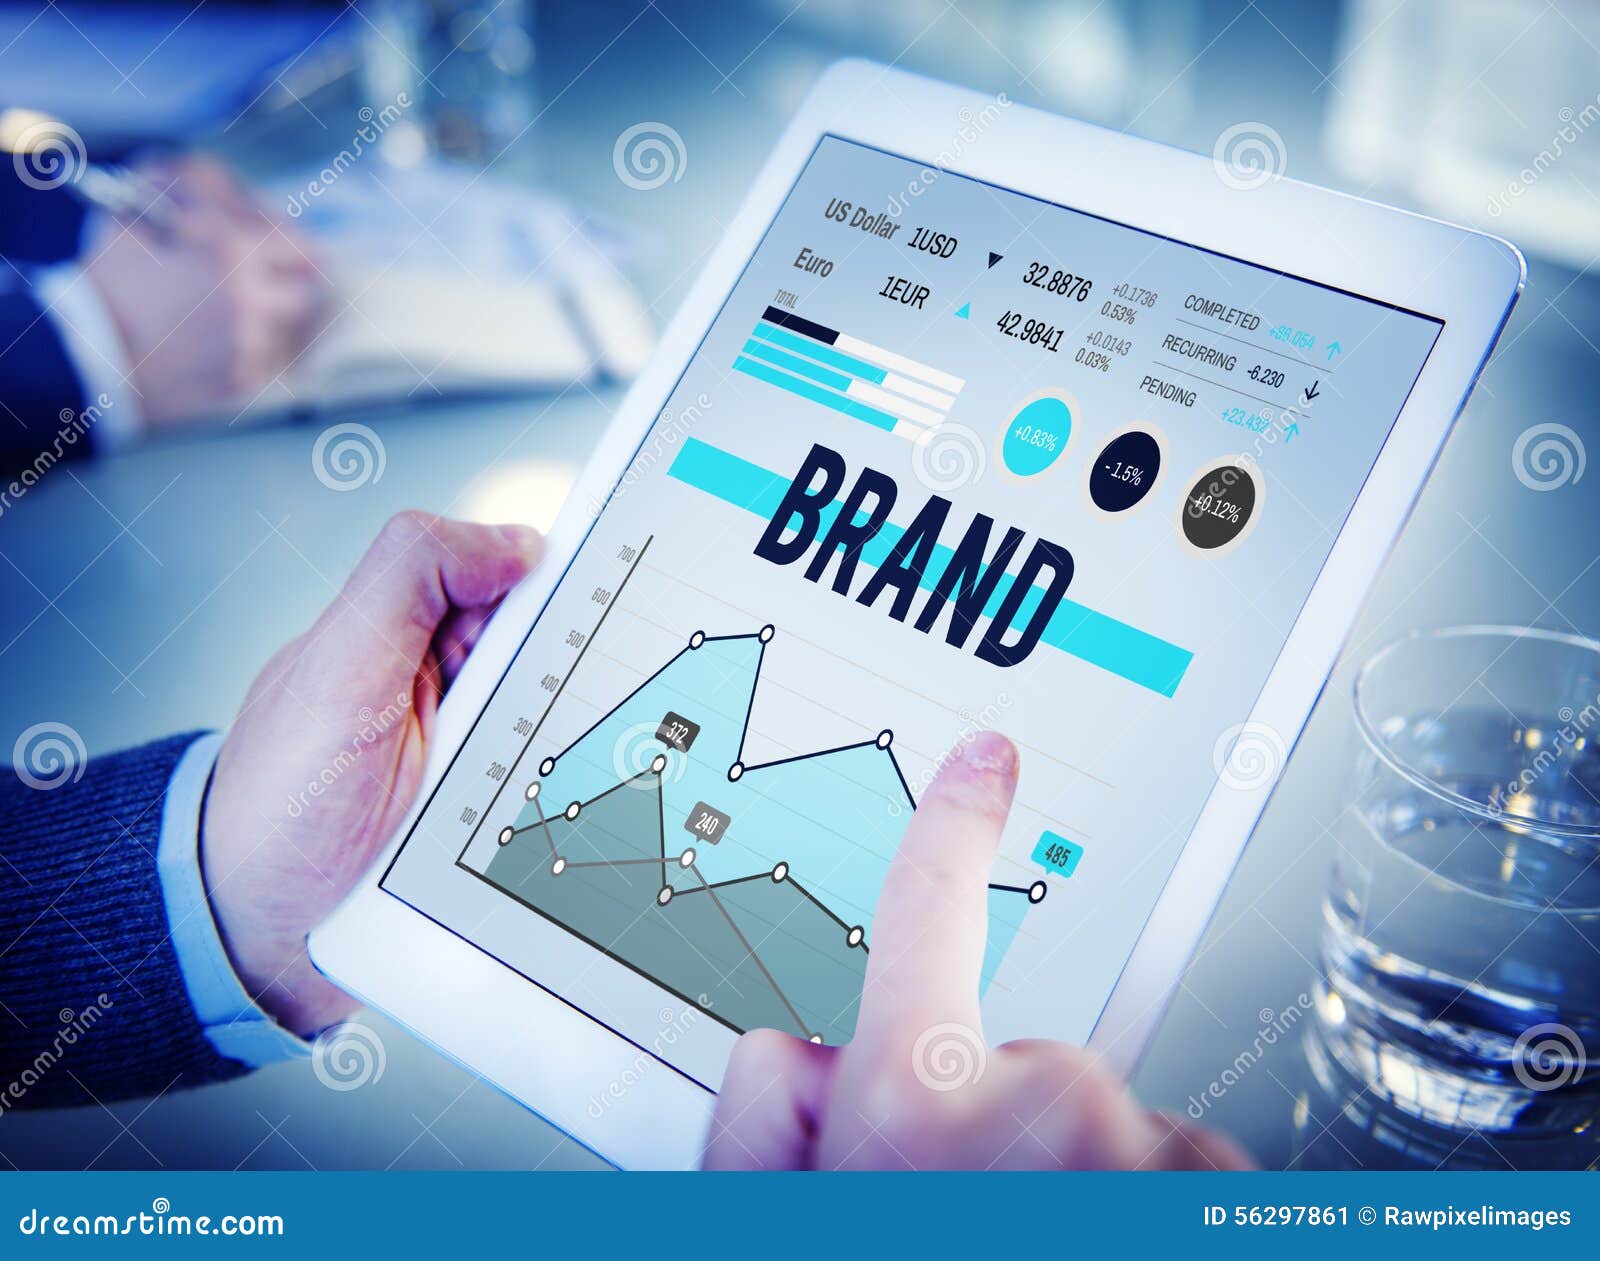 brand branding marketing business strategy concept